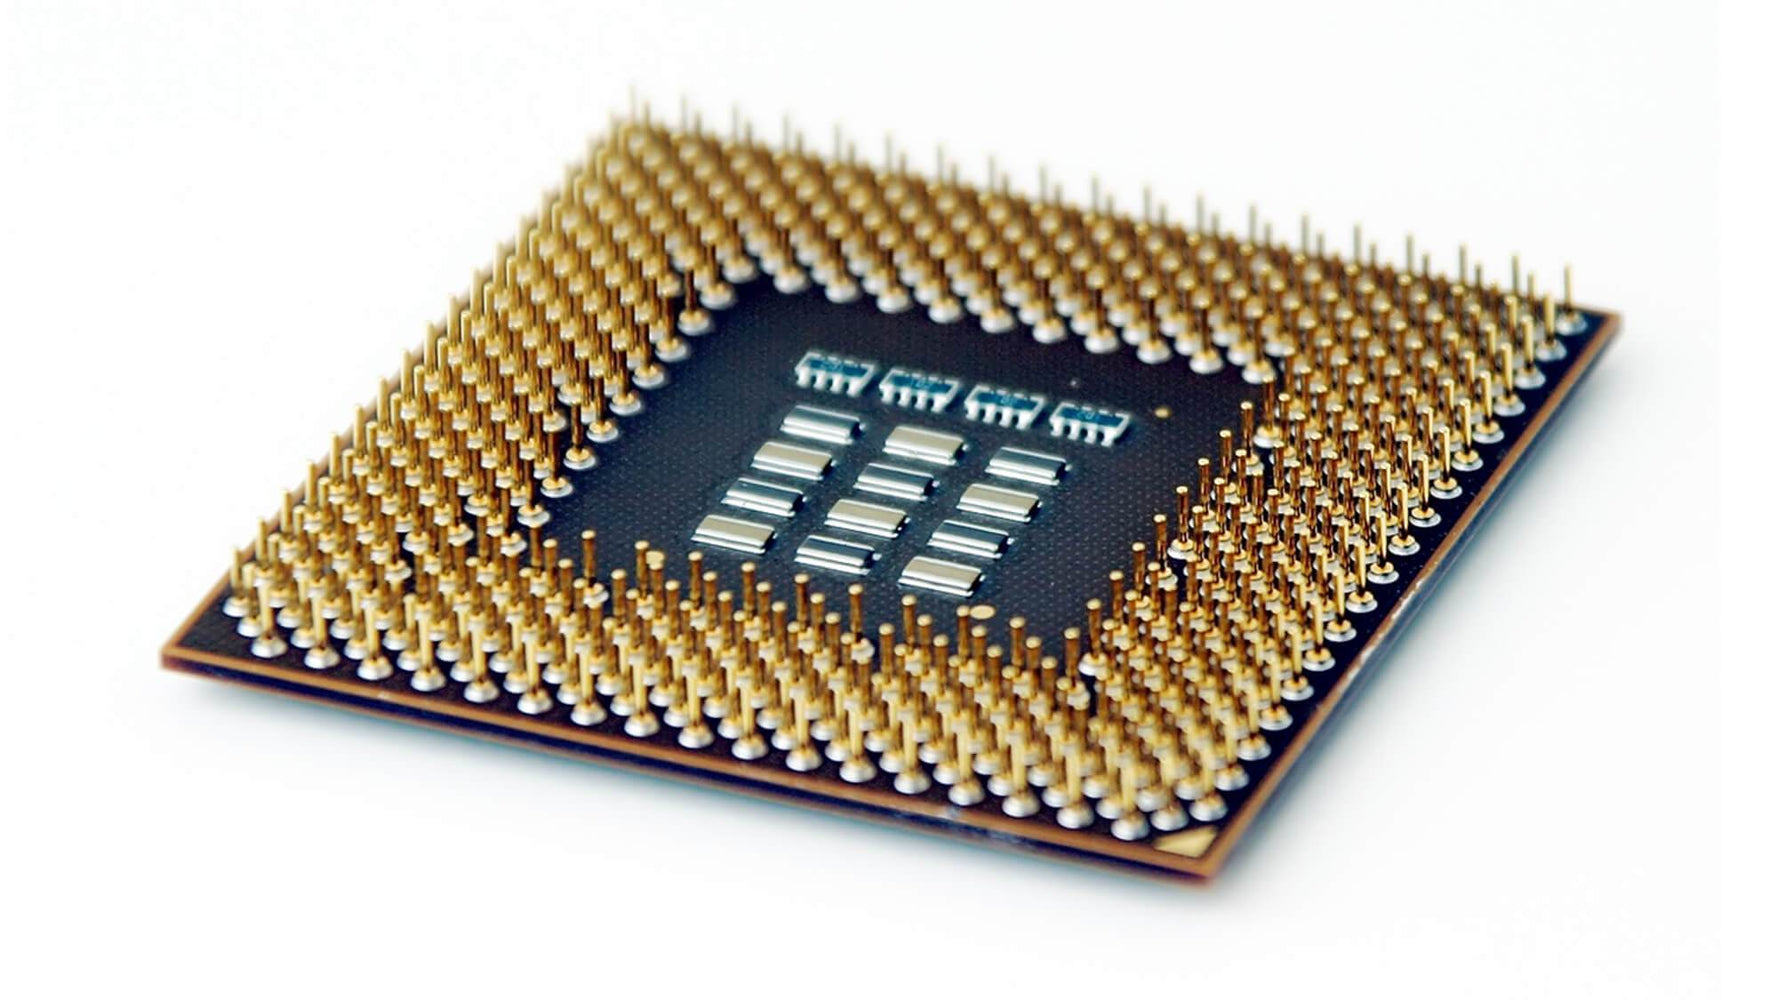 BX80623I52450P-A1 - Intel Core i5-2450P 4-Core 3.20GHz 5GT/s DMI 6MB L3 Cache Socket LGA1155 Processor